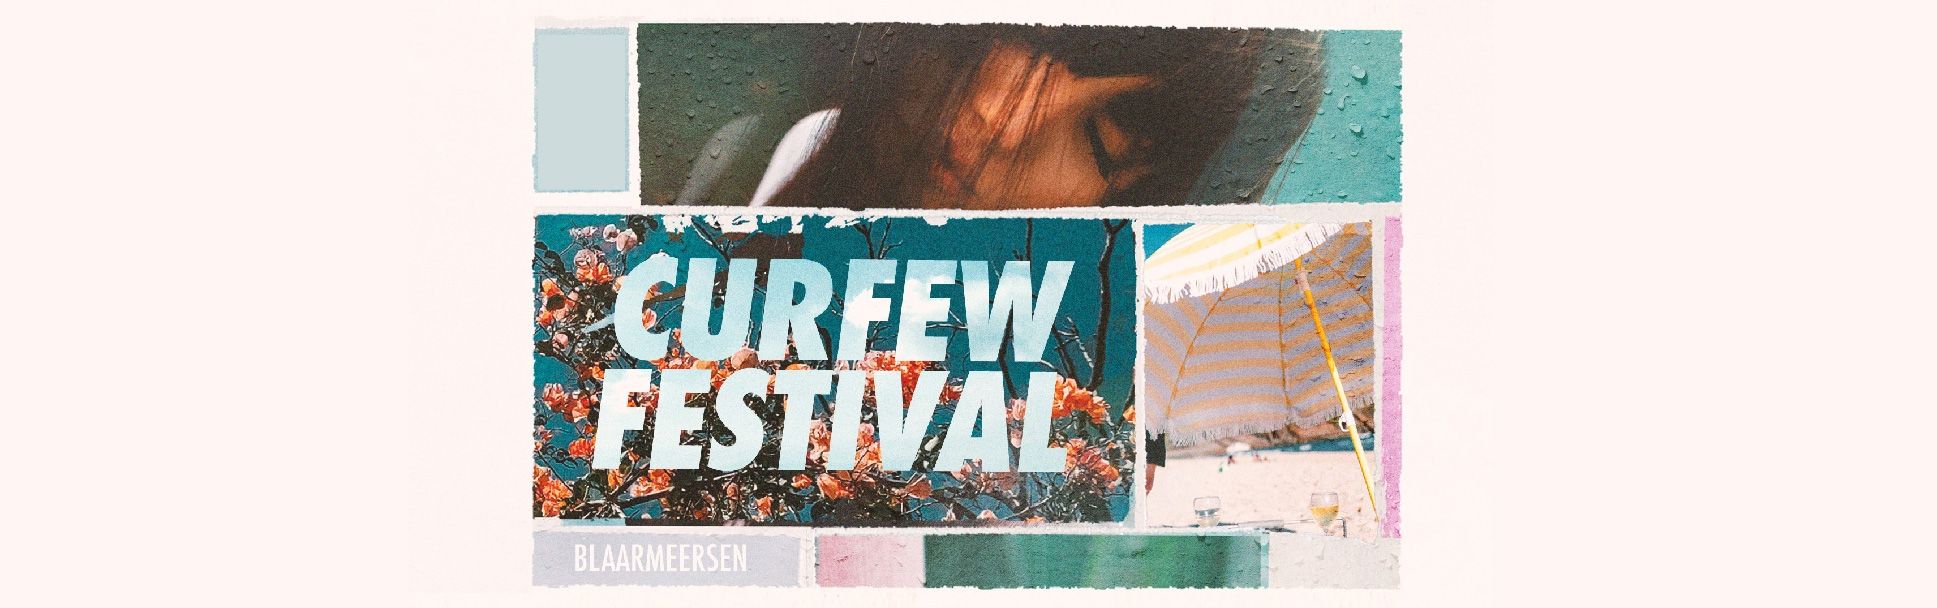 Curfew Festival header